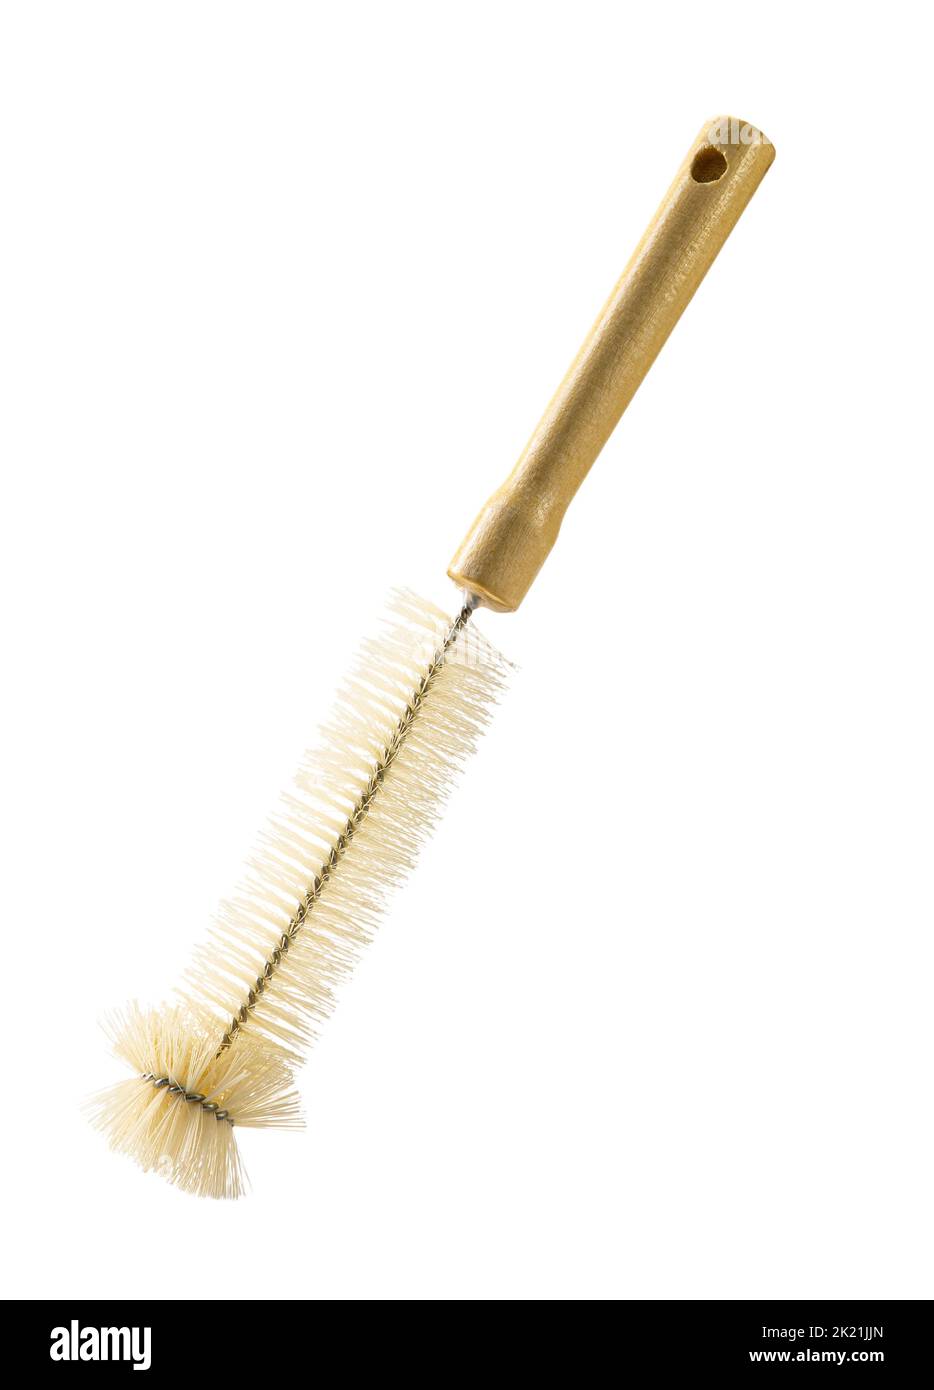 Brass Bristle Cleaning Brush